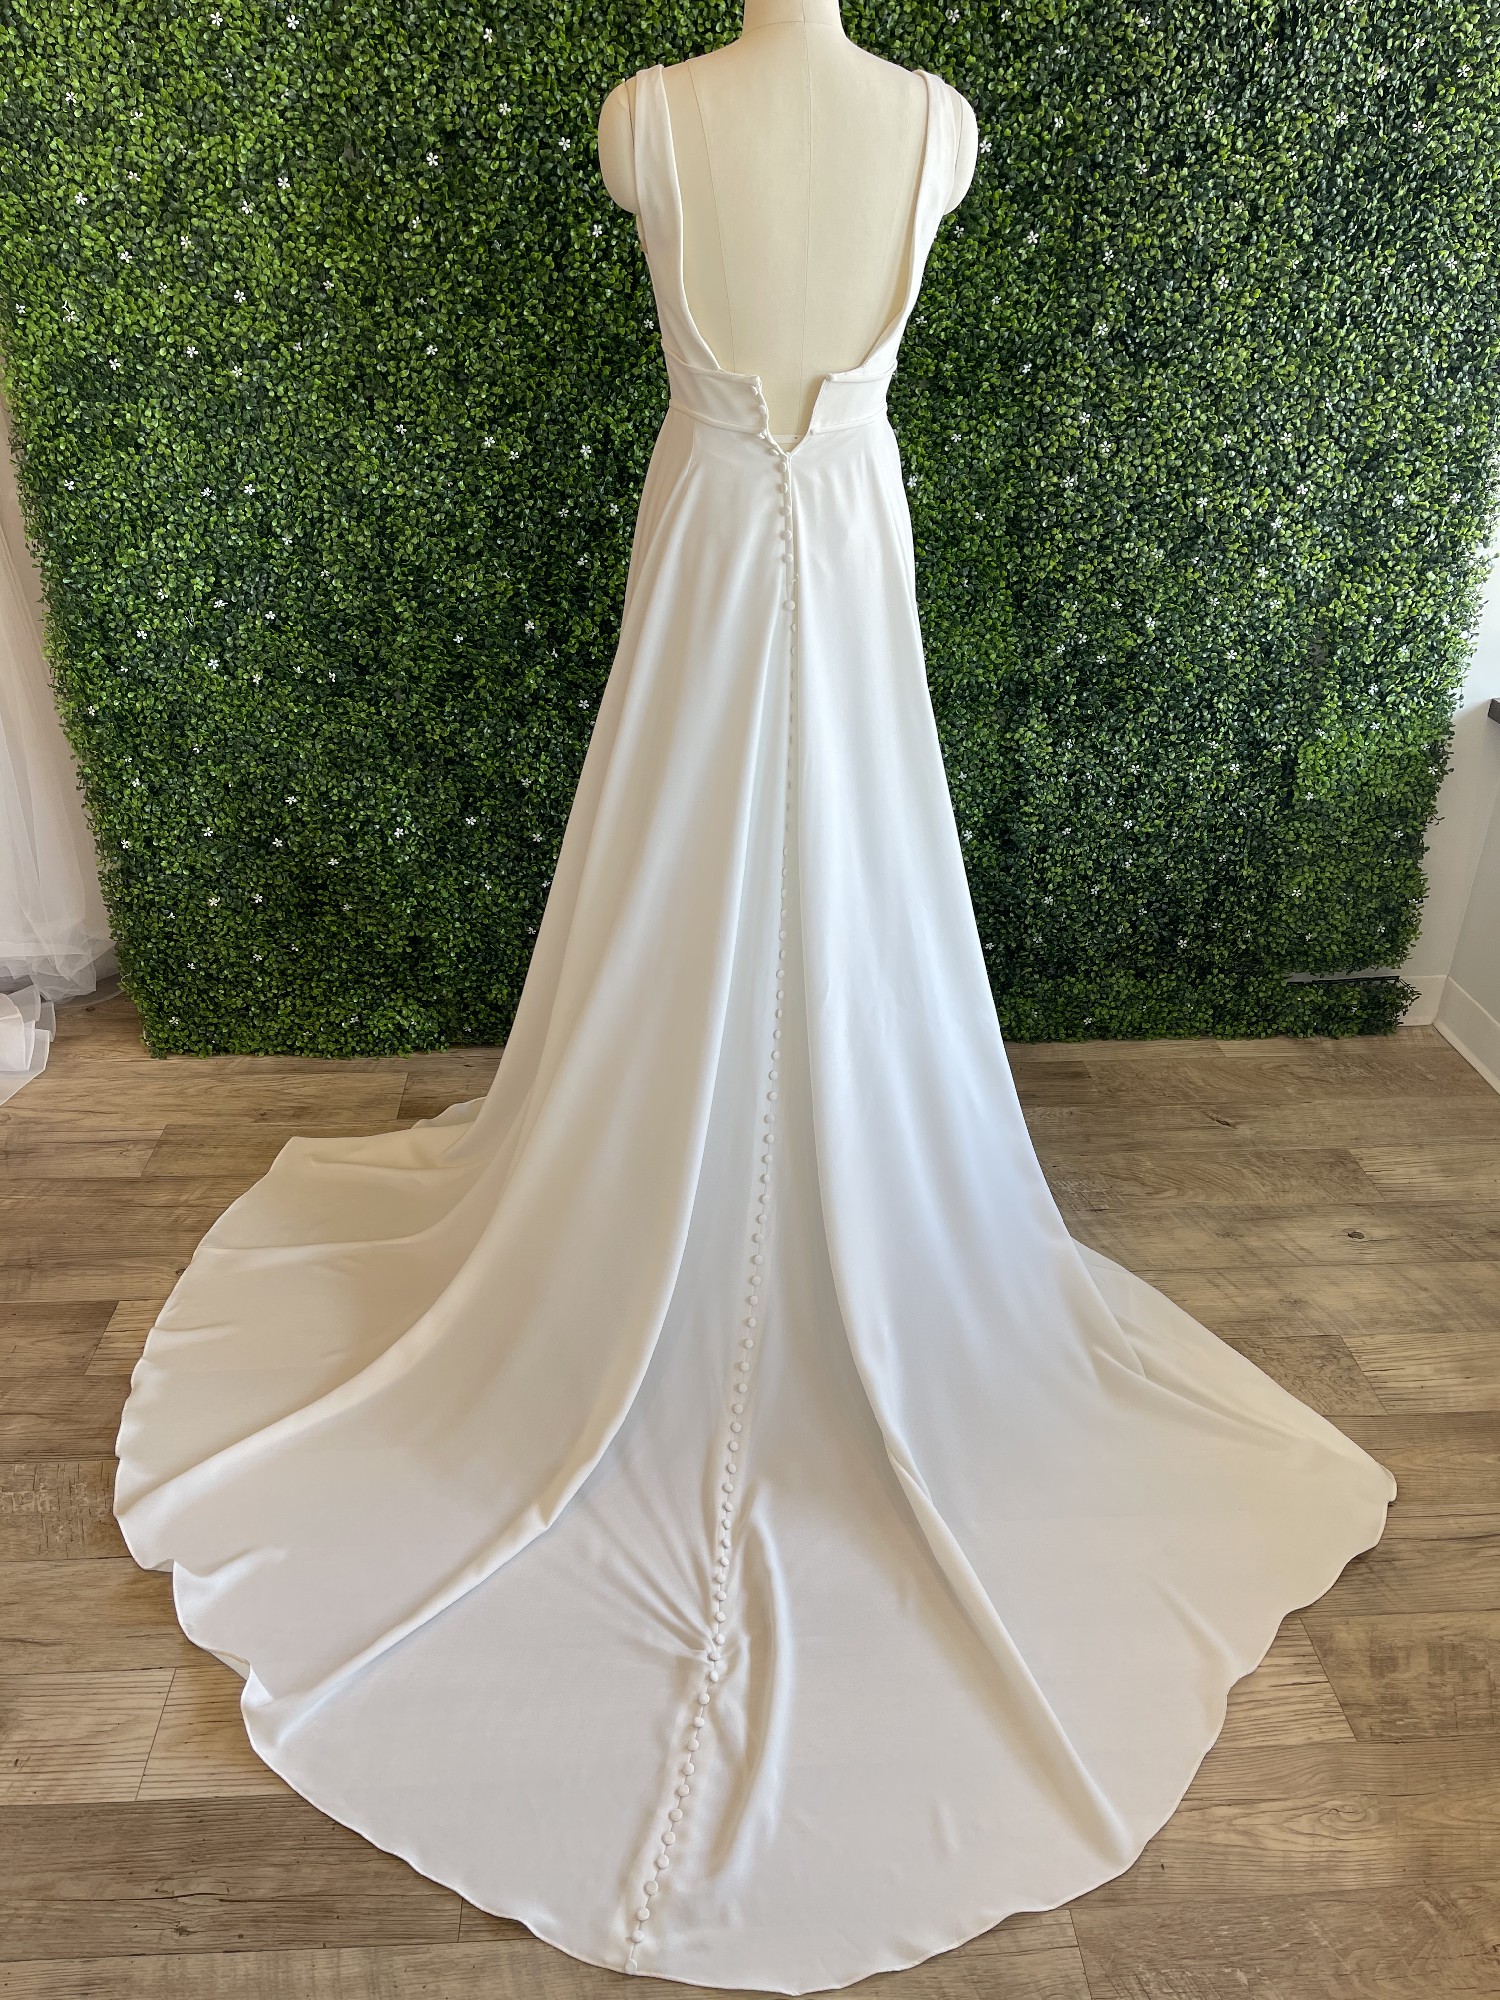 Stella York 7042 Sample Wedding Dress Save 83% - Stillwhite